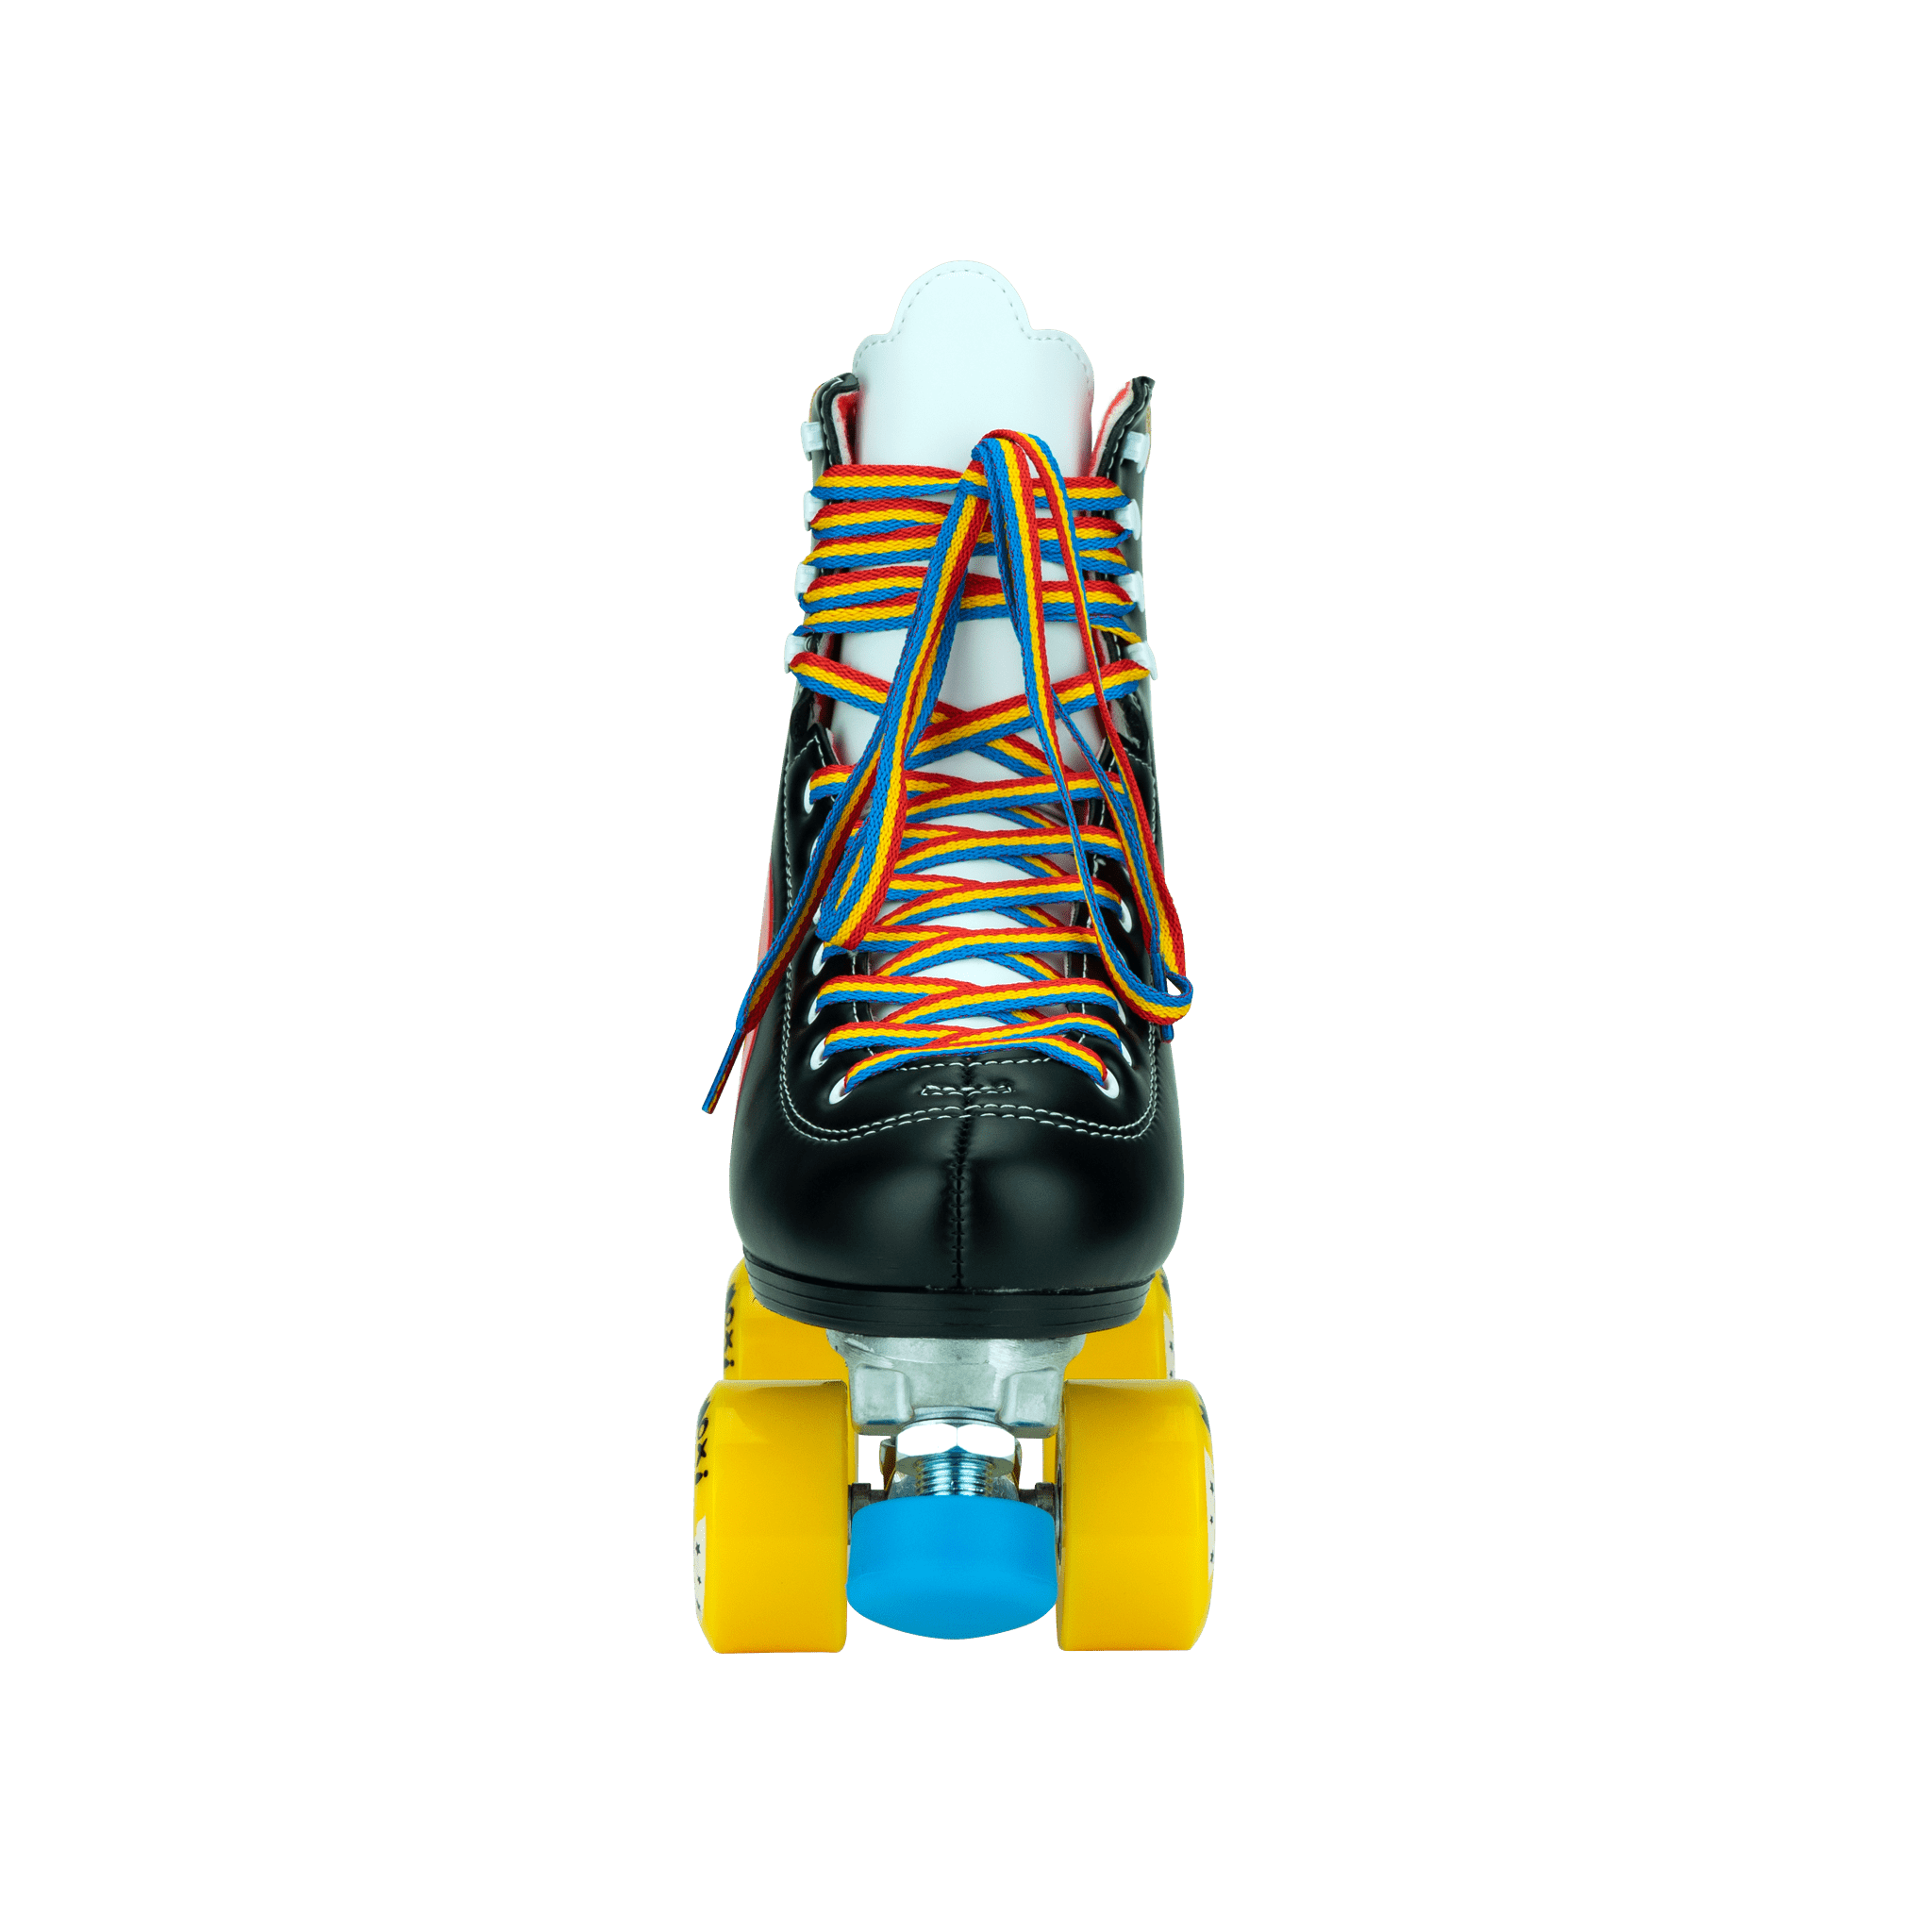 Moxi Rainbow Rider roller skates